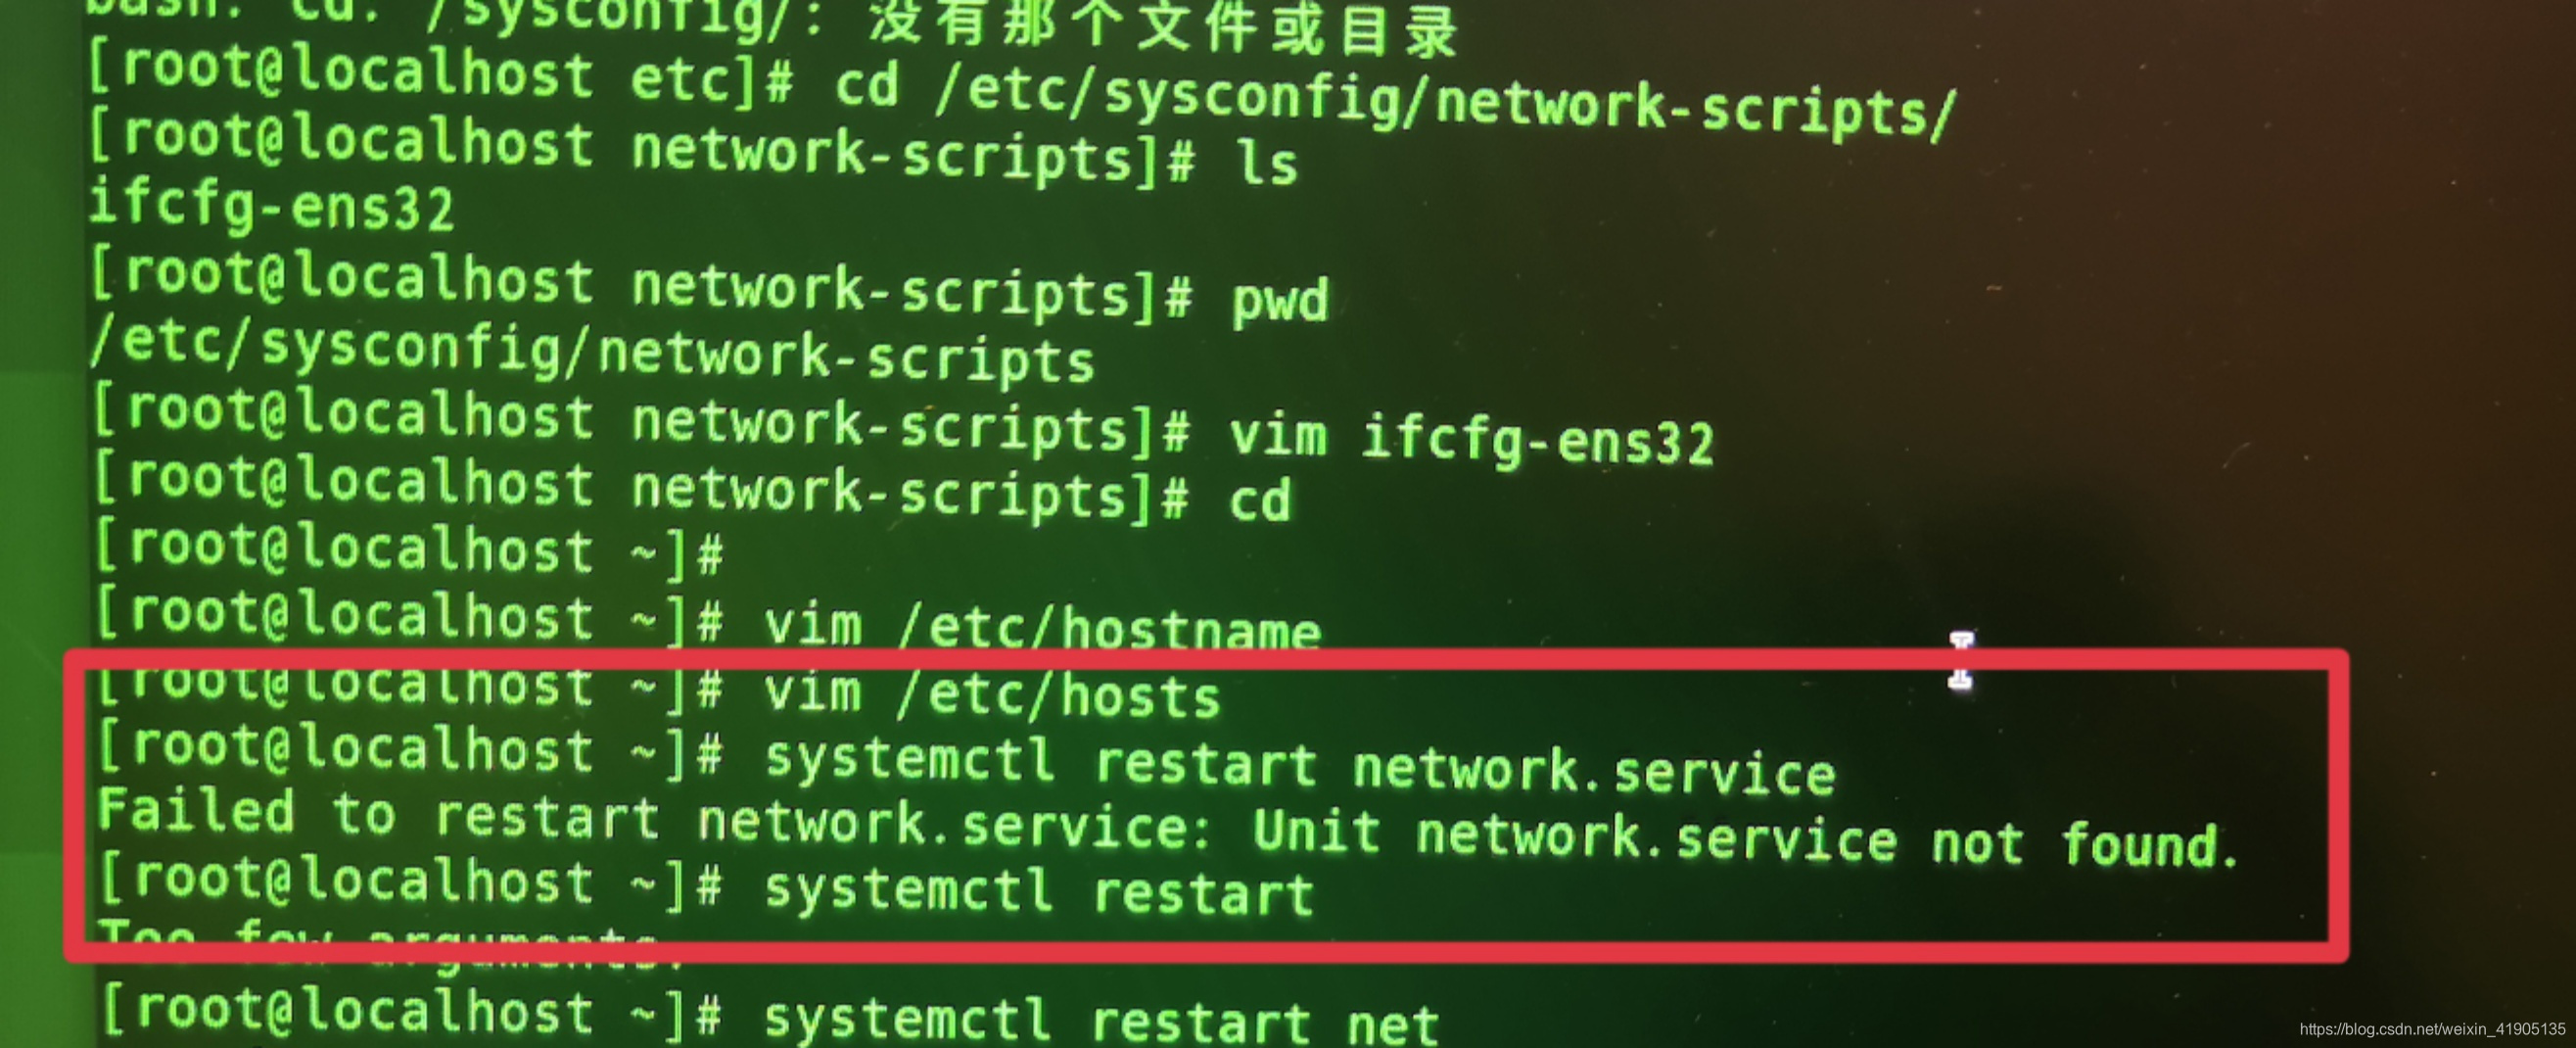 CentOS 8.1 执行#systemctl restart network.service报错的解决方法_重启